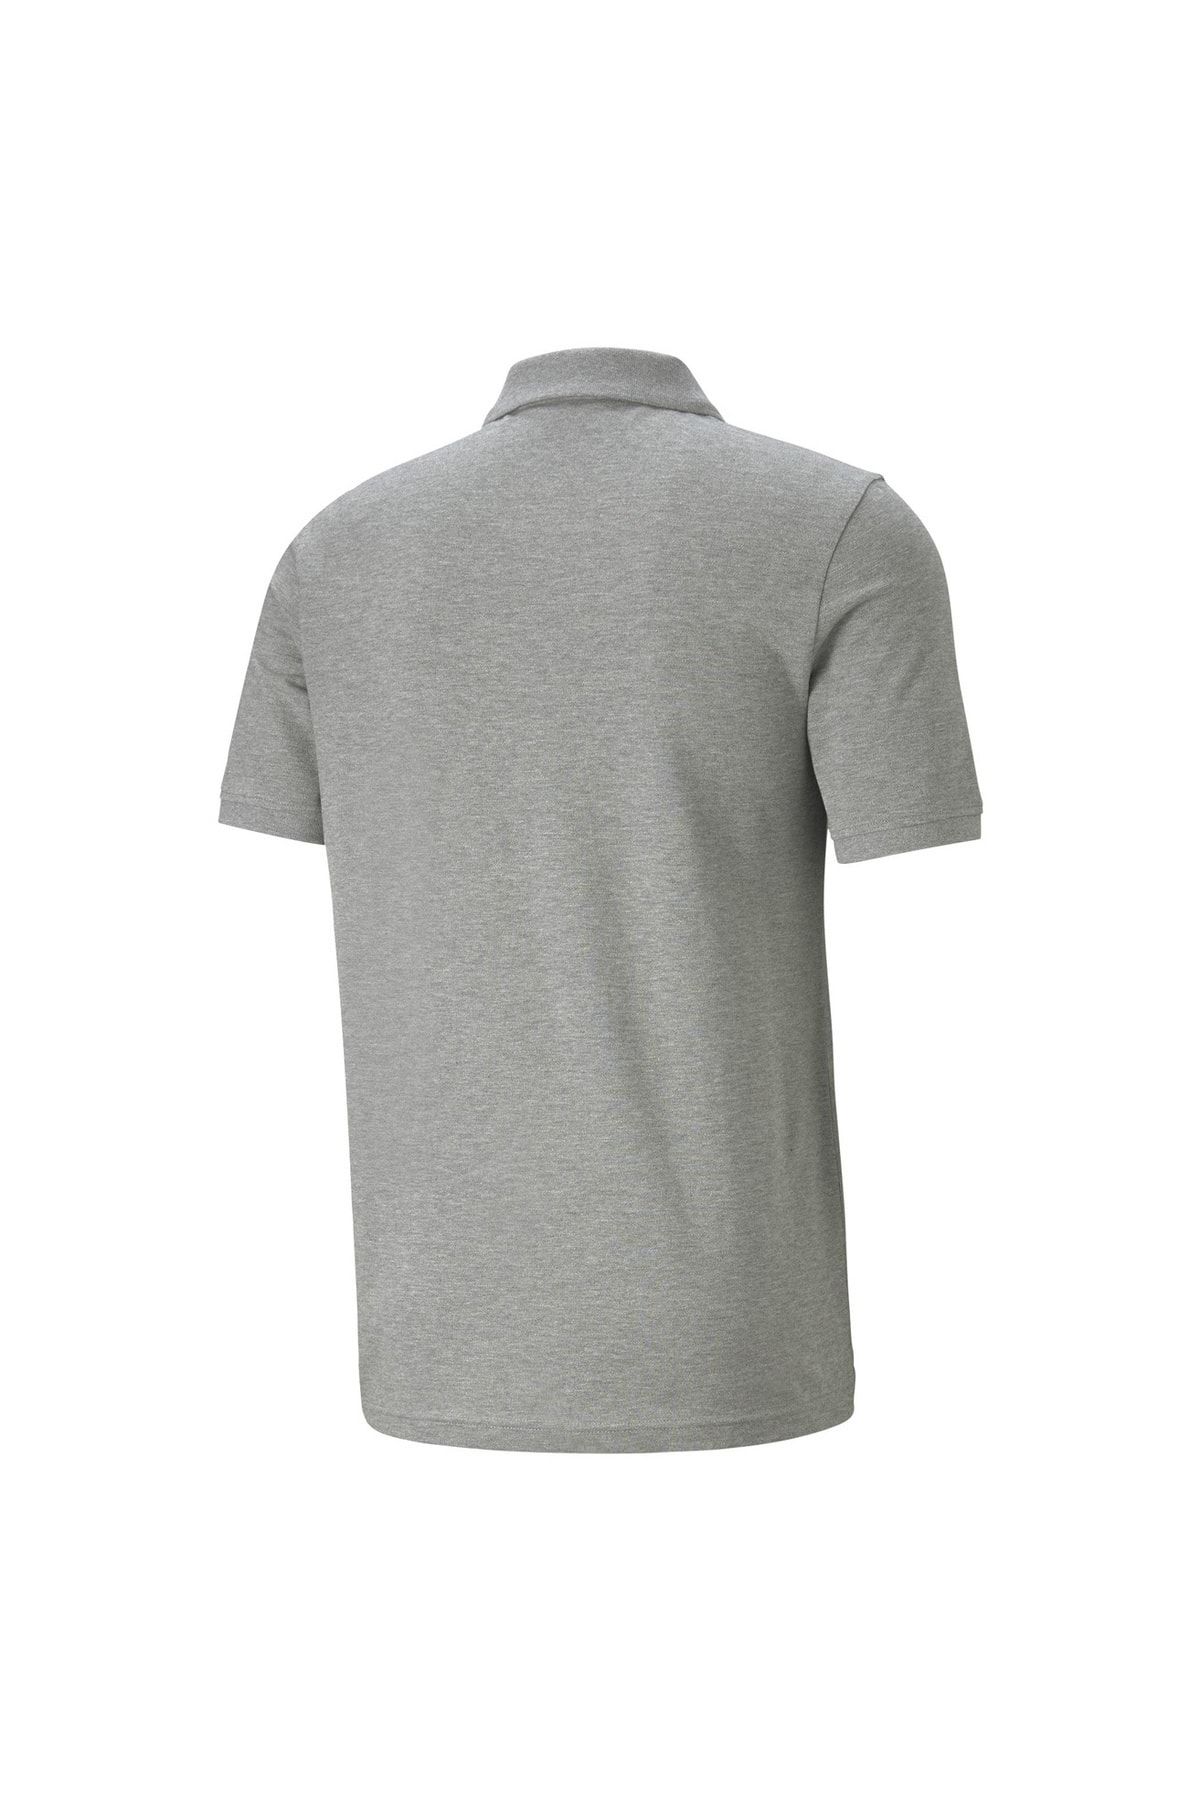 Puma Men\'s T-Shirt G Neck Plain - Polo Trendyol ESS 58667403 Gray Medium Round Pique